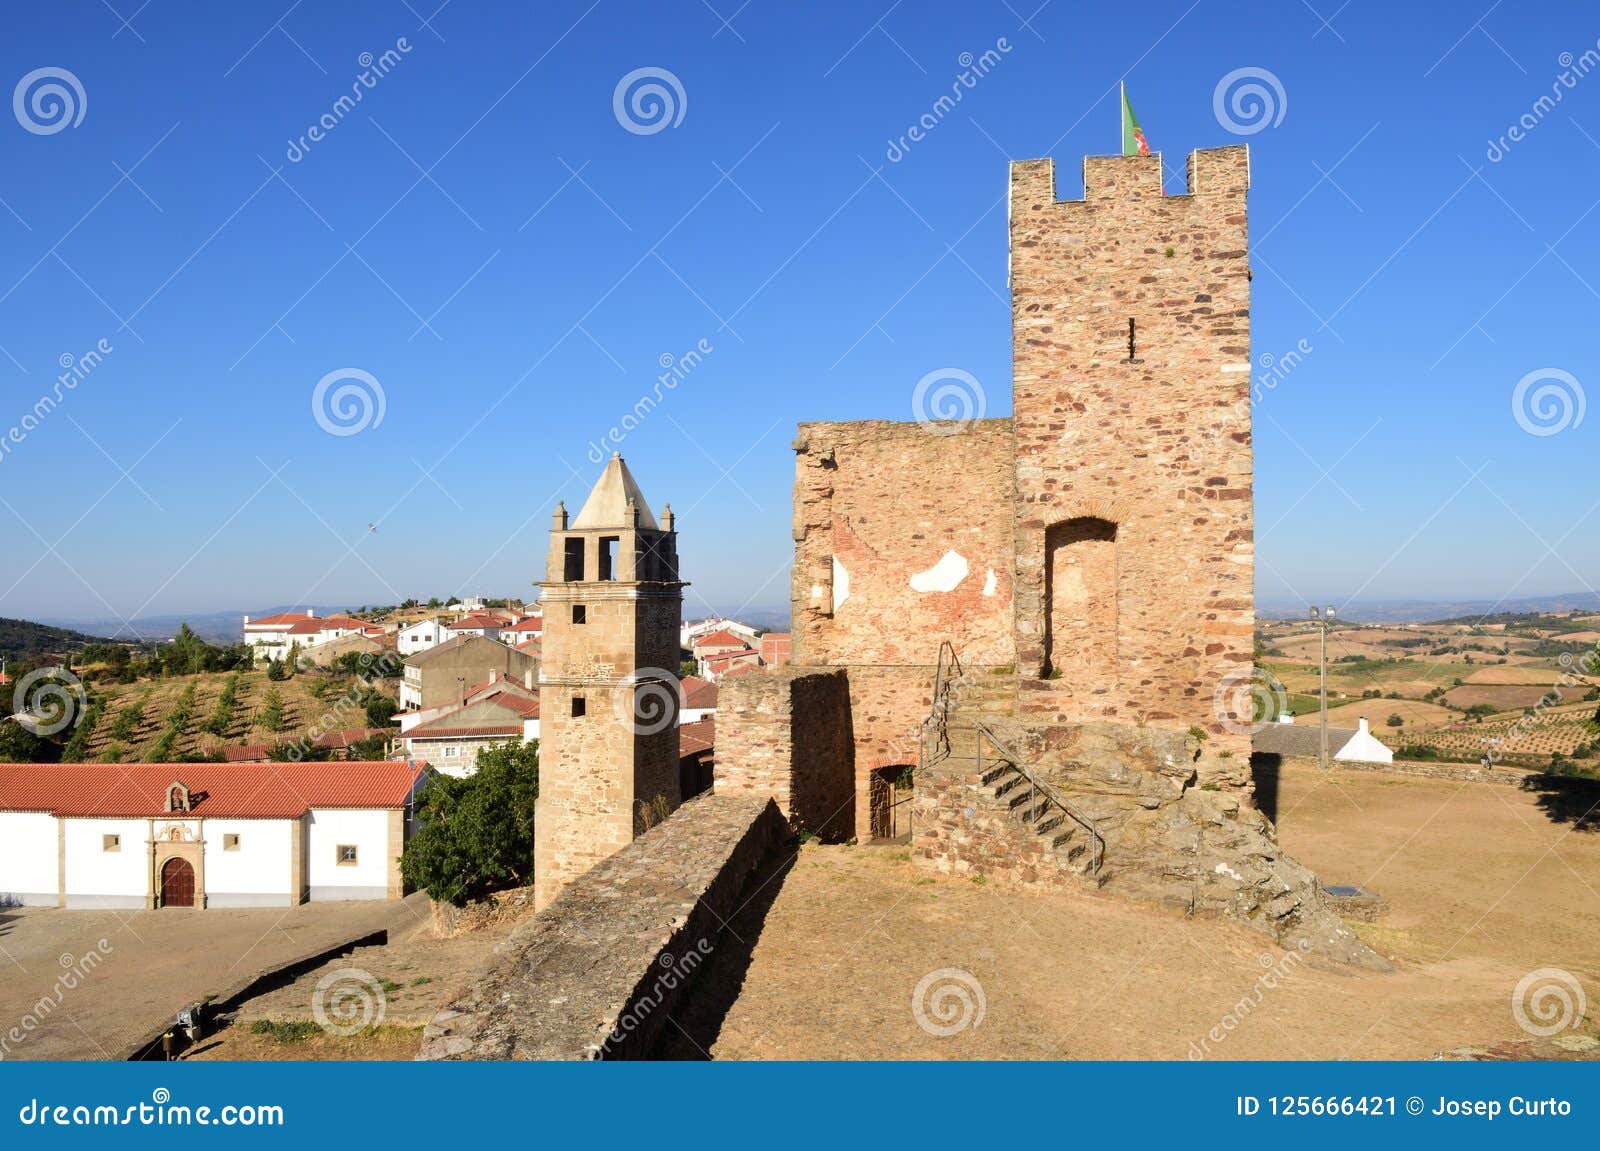 view tower and the misericordia church, mogadoura, tras os montes, po